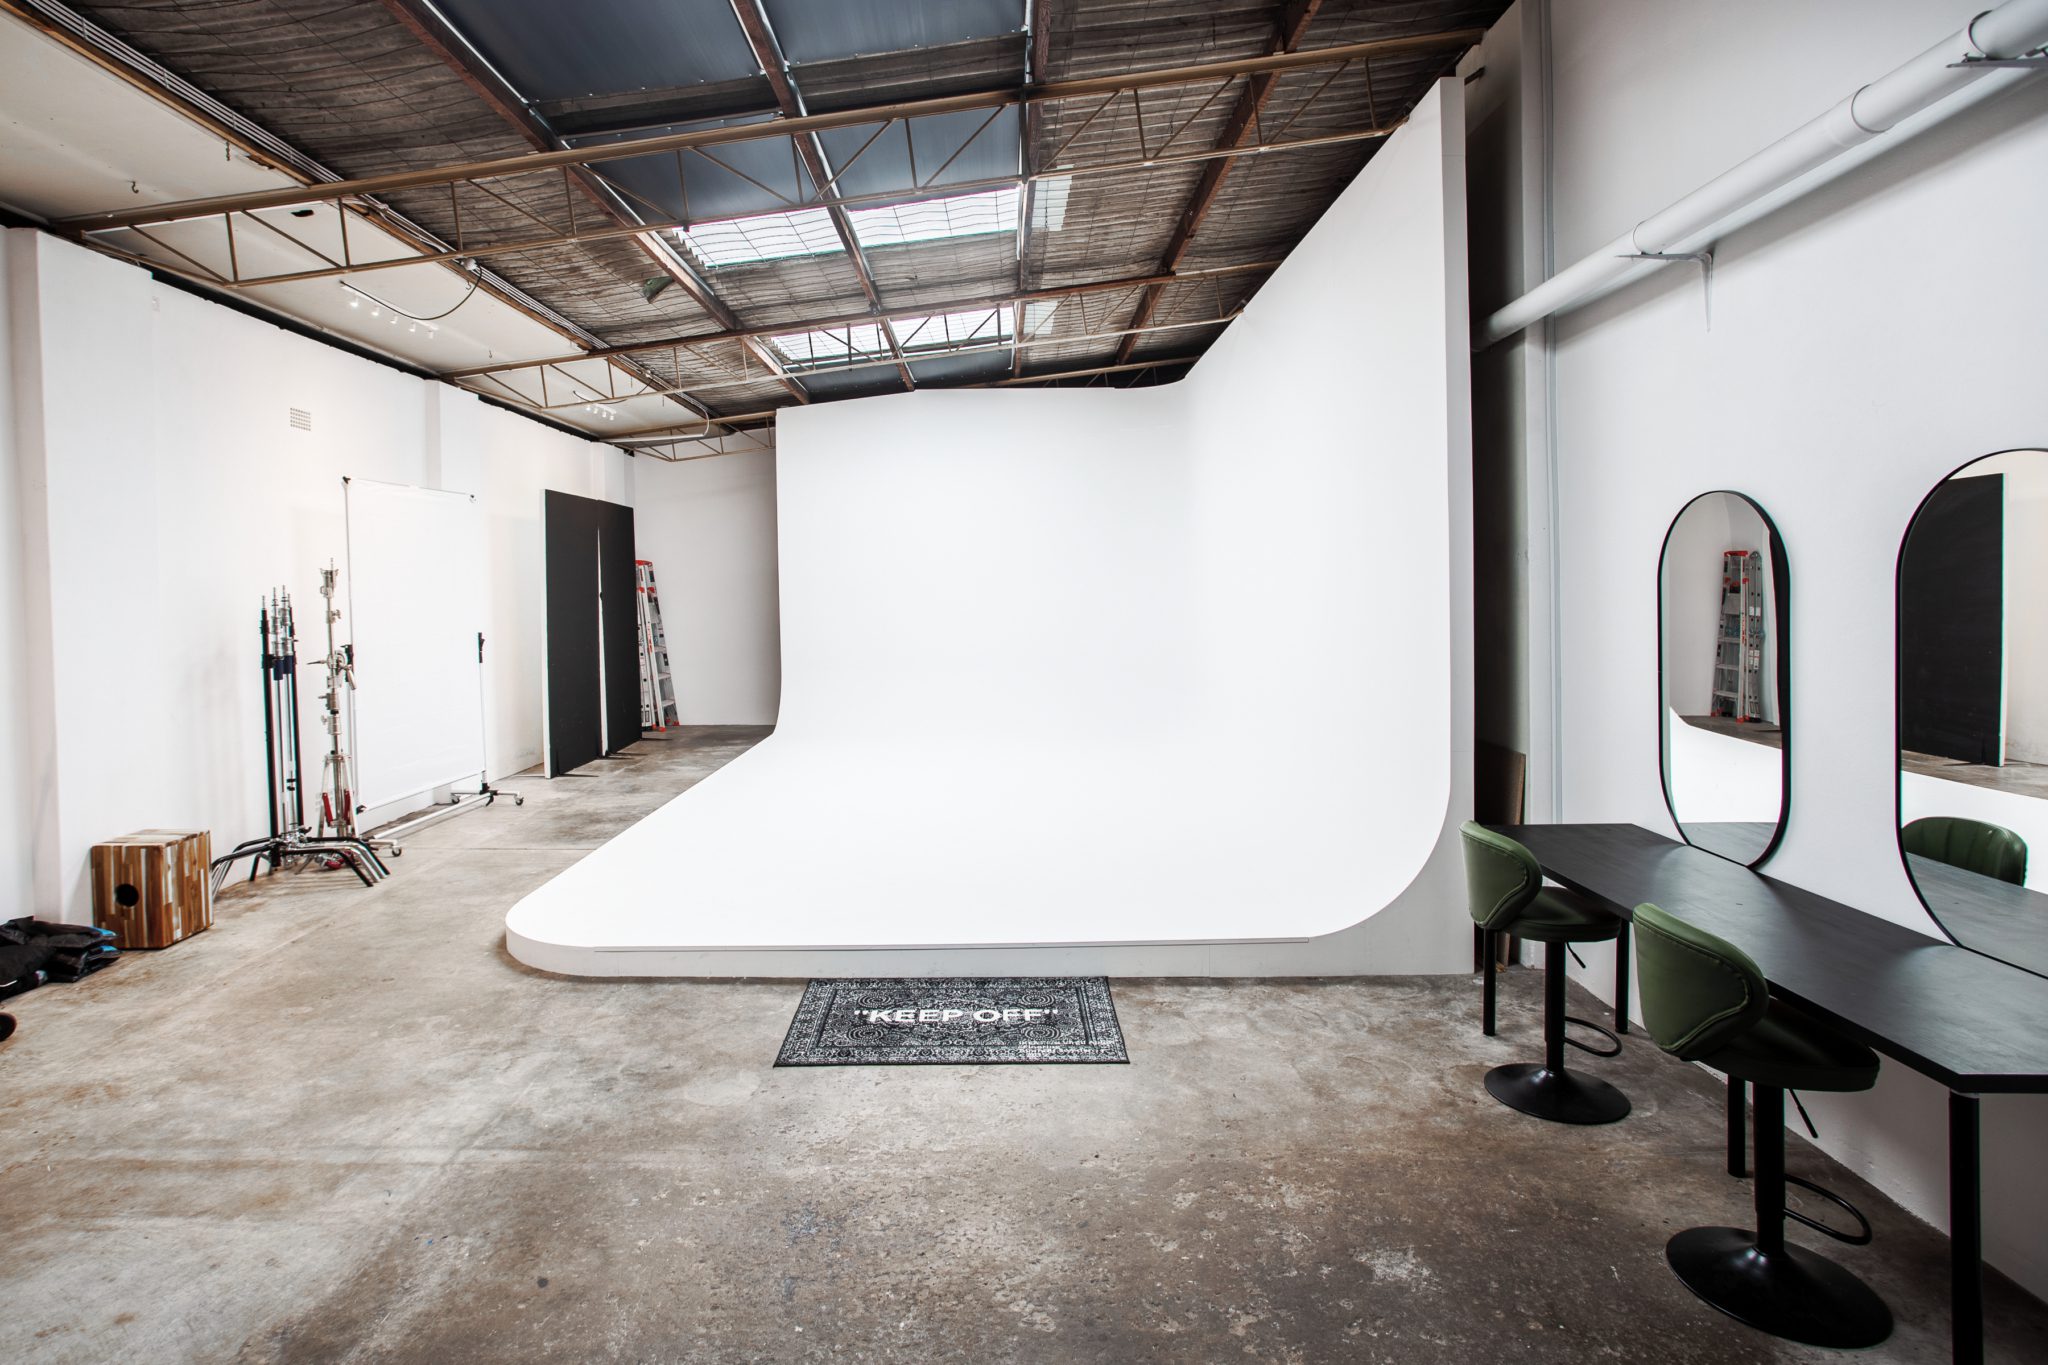 Studio Killa – Industrial Chic Photography Studio